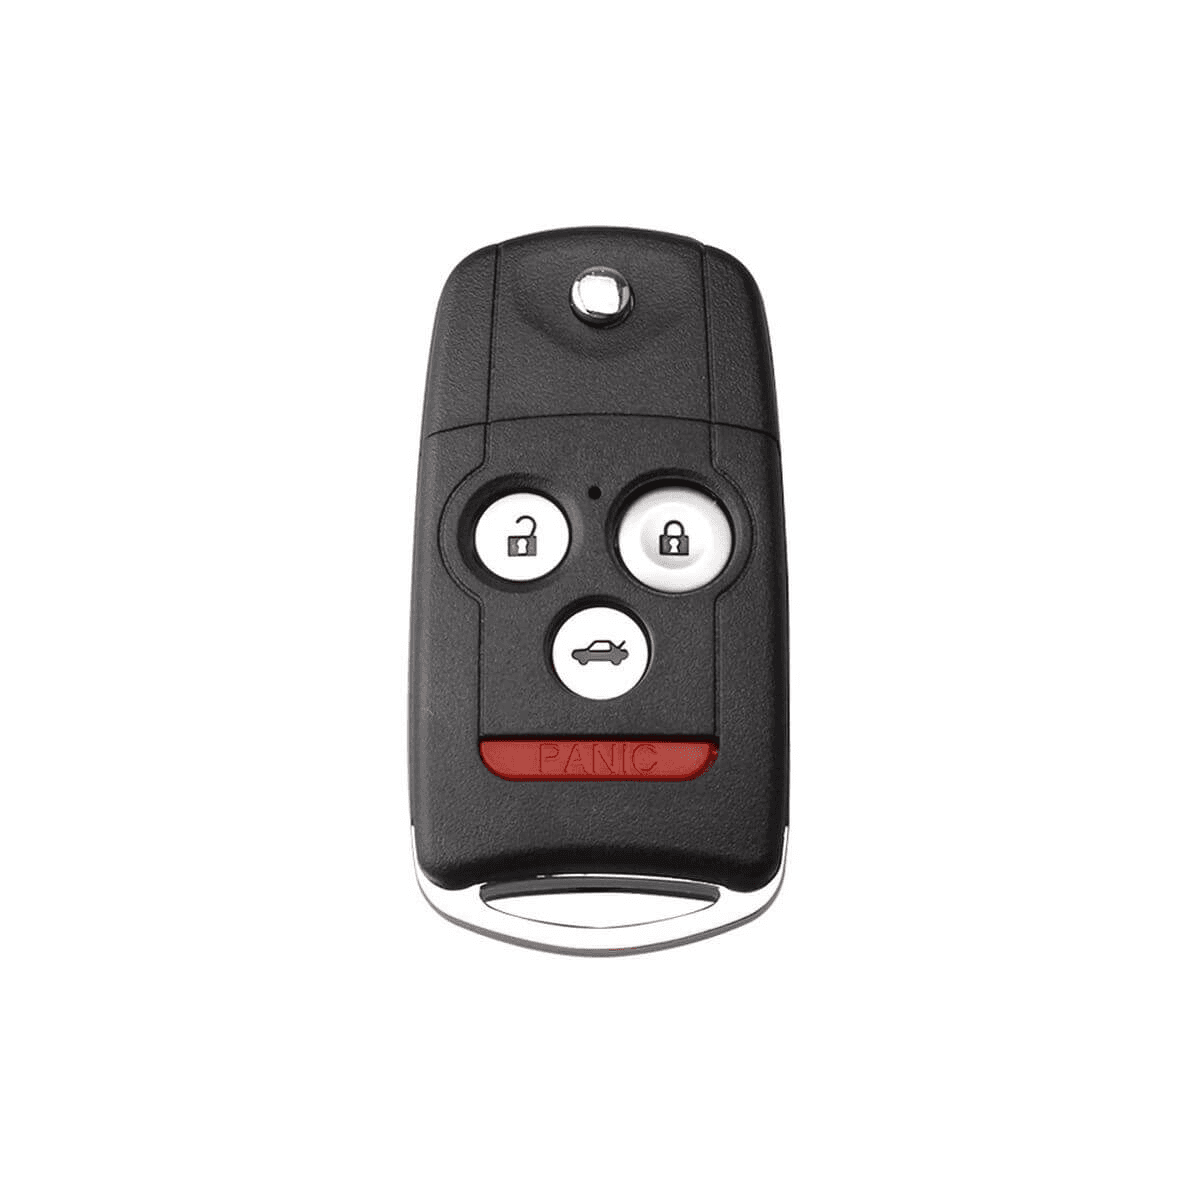 Selected image for CAR ACESSORIES 888 Kućište auto ključa 3+1 taster za Hondu E38-AP000